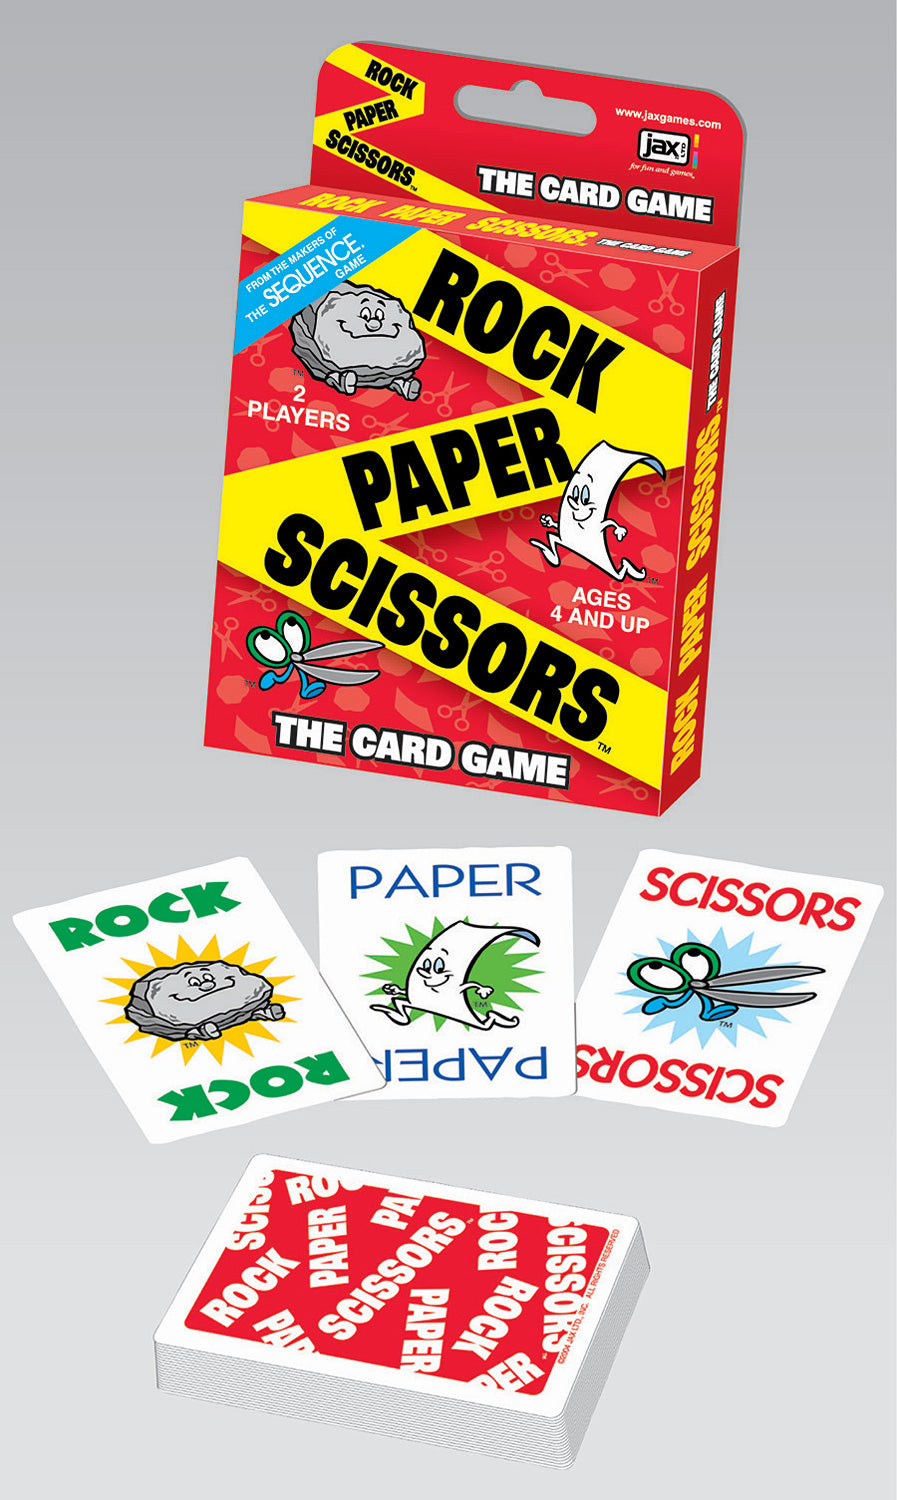 Rock, Paper, Scissors Game